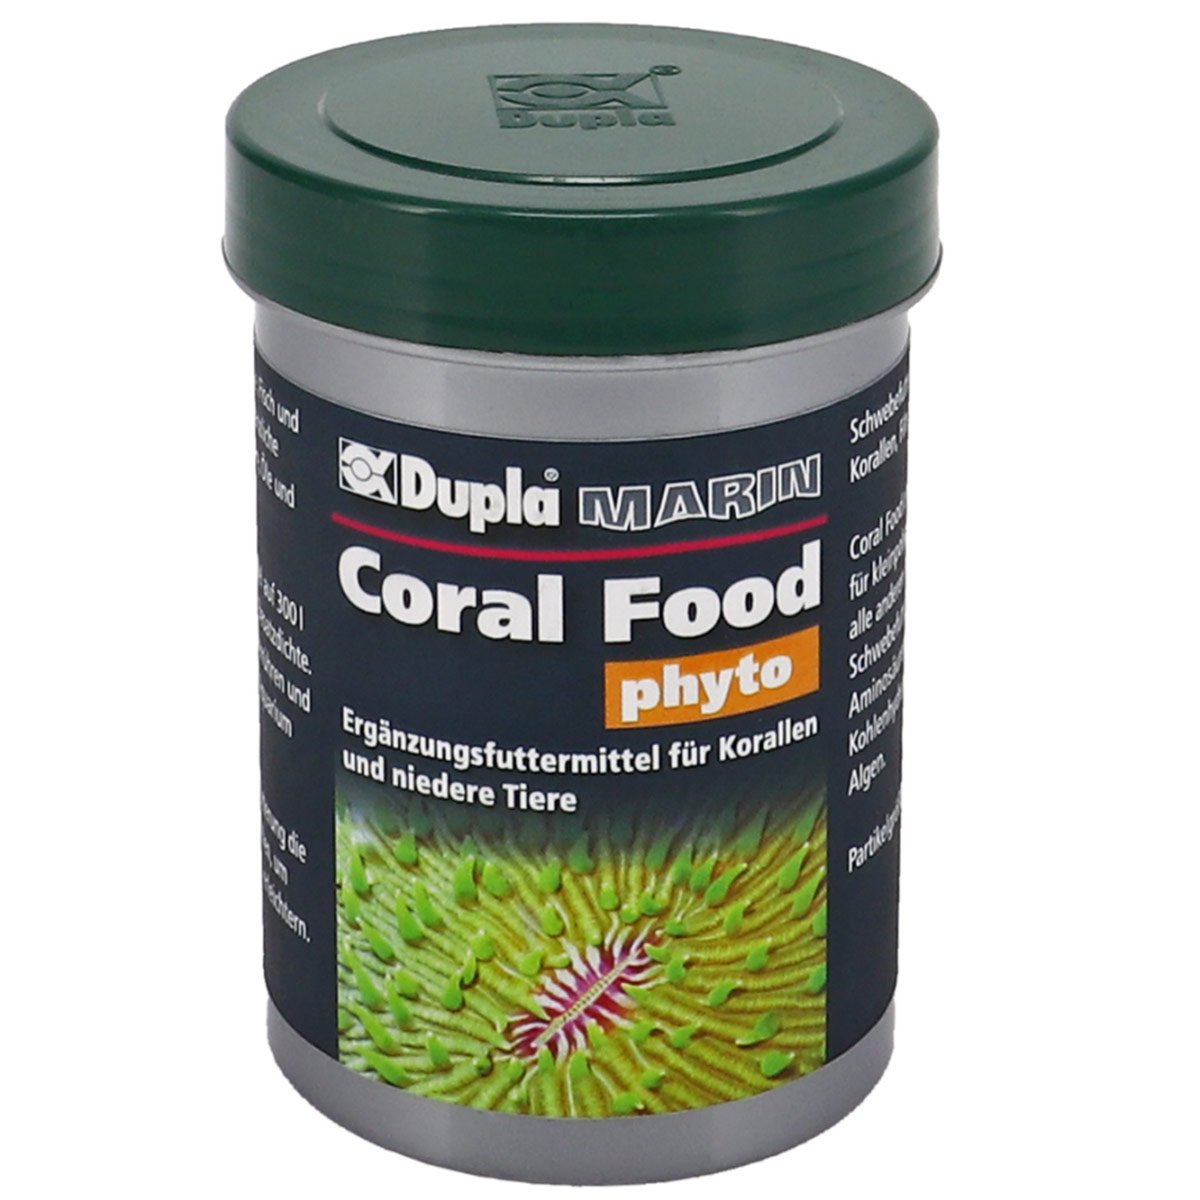 Dupla Marin Coral Food phyto 180 ml, 85 g